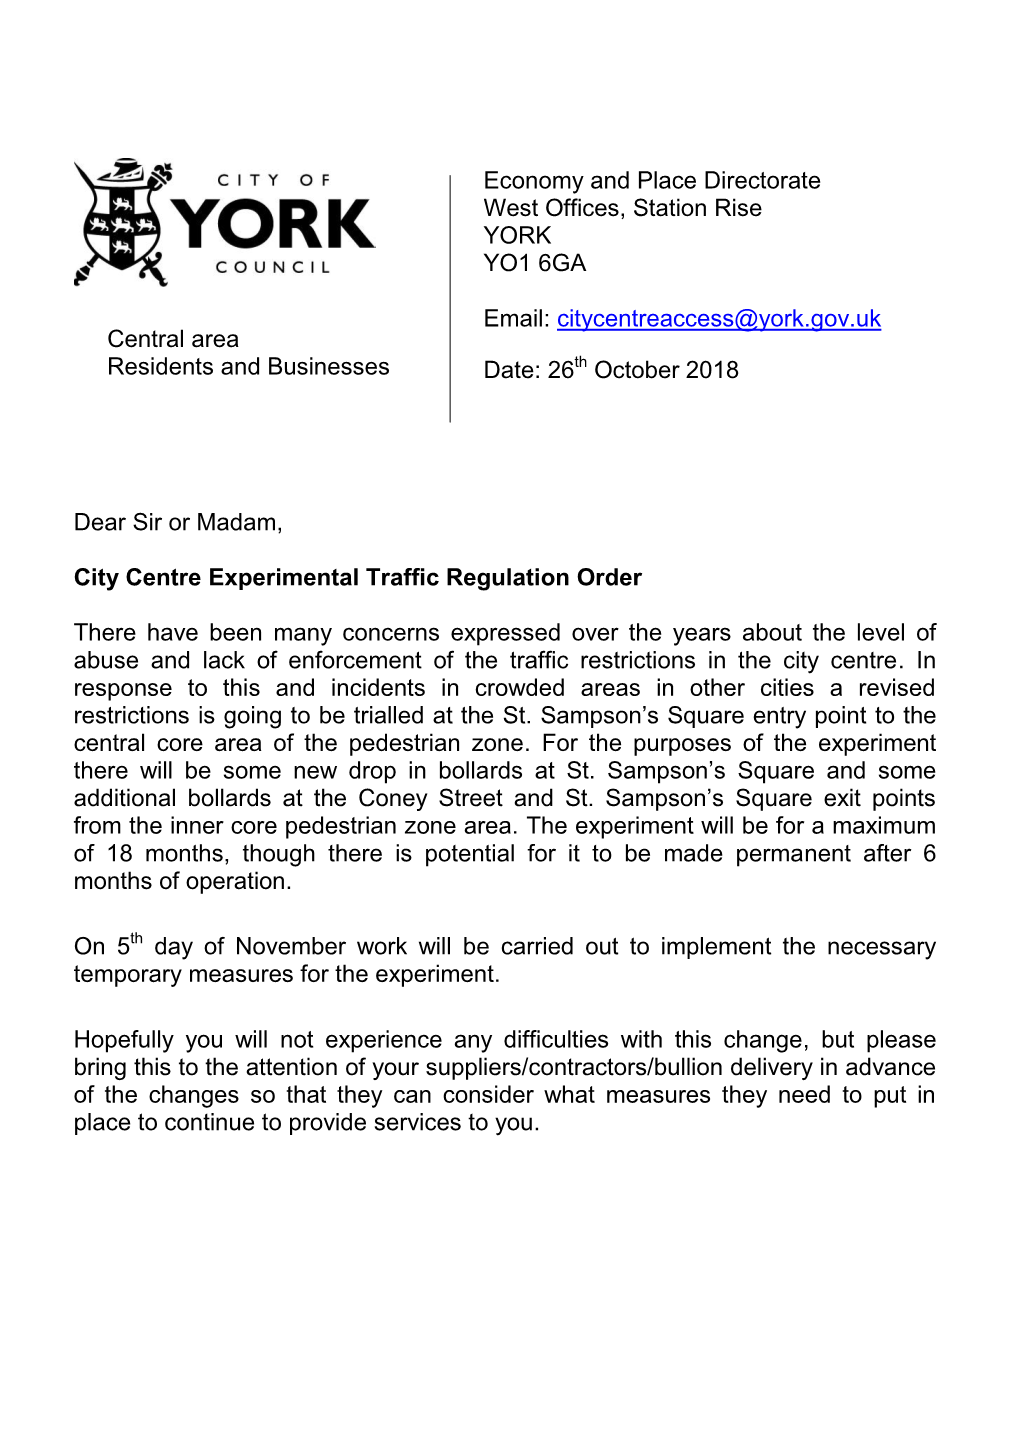 Dear Sir Or Madam, City Centre Experimental Traffic Regulation